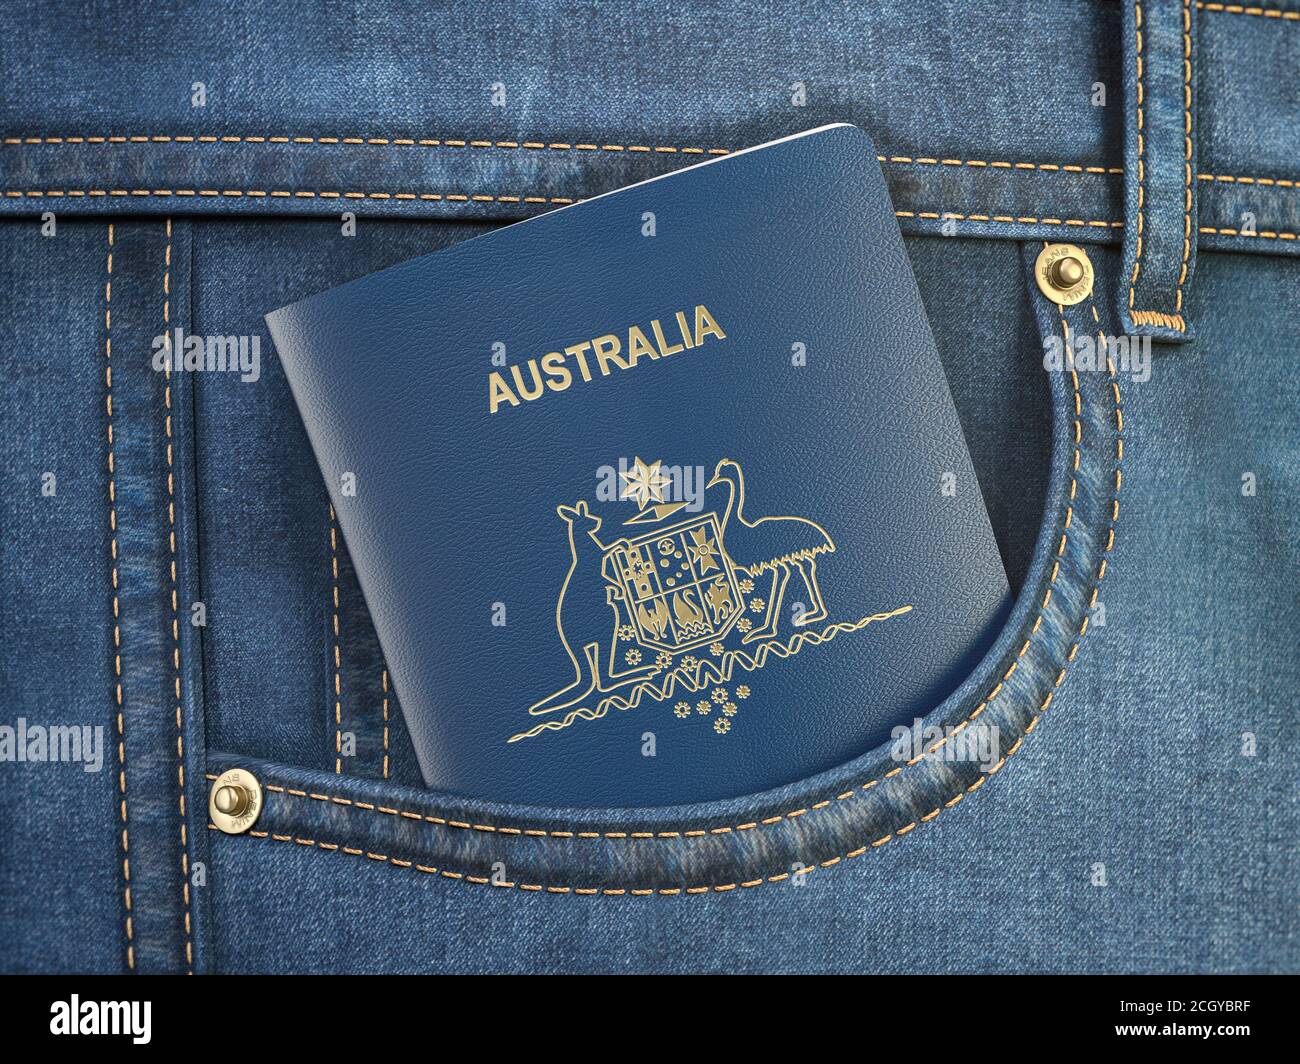 Passport of Australia in pocket jeans. Travel, tourism, emigration and passport control concept. 3d illustration Stock Photo